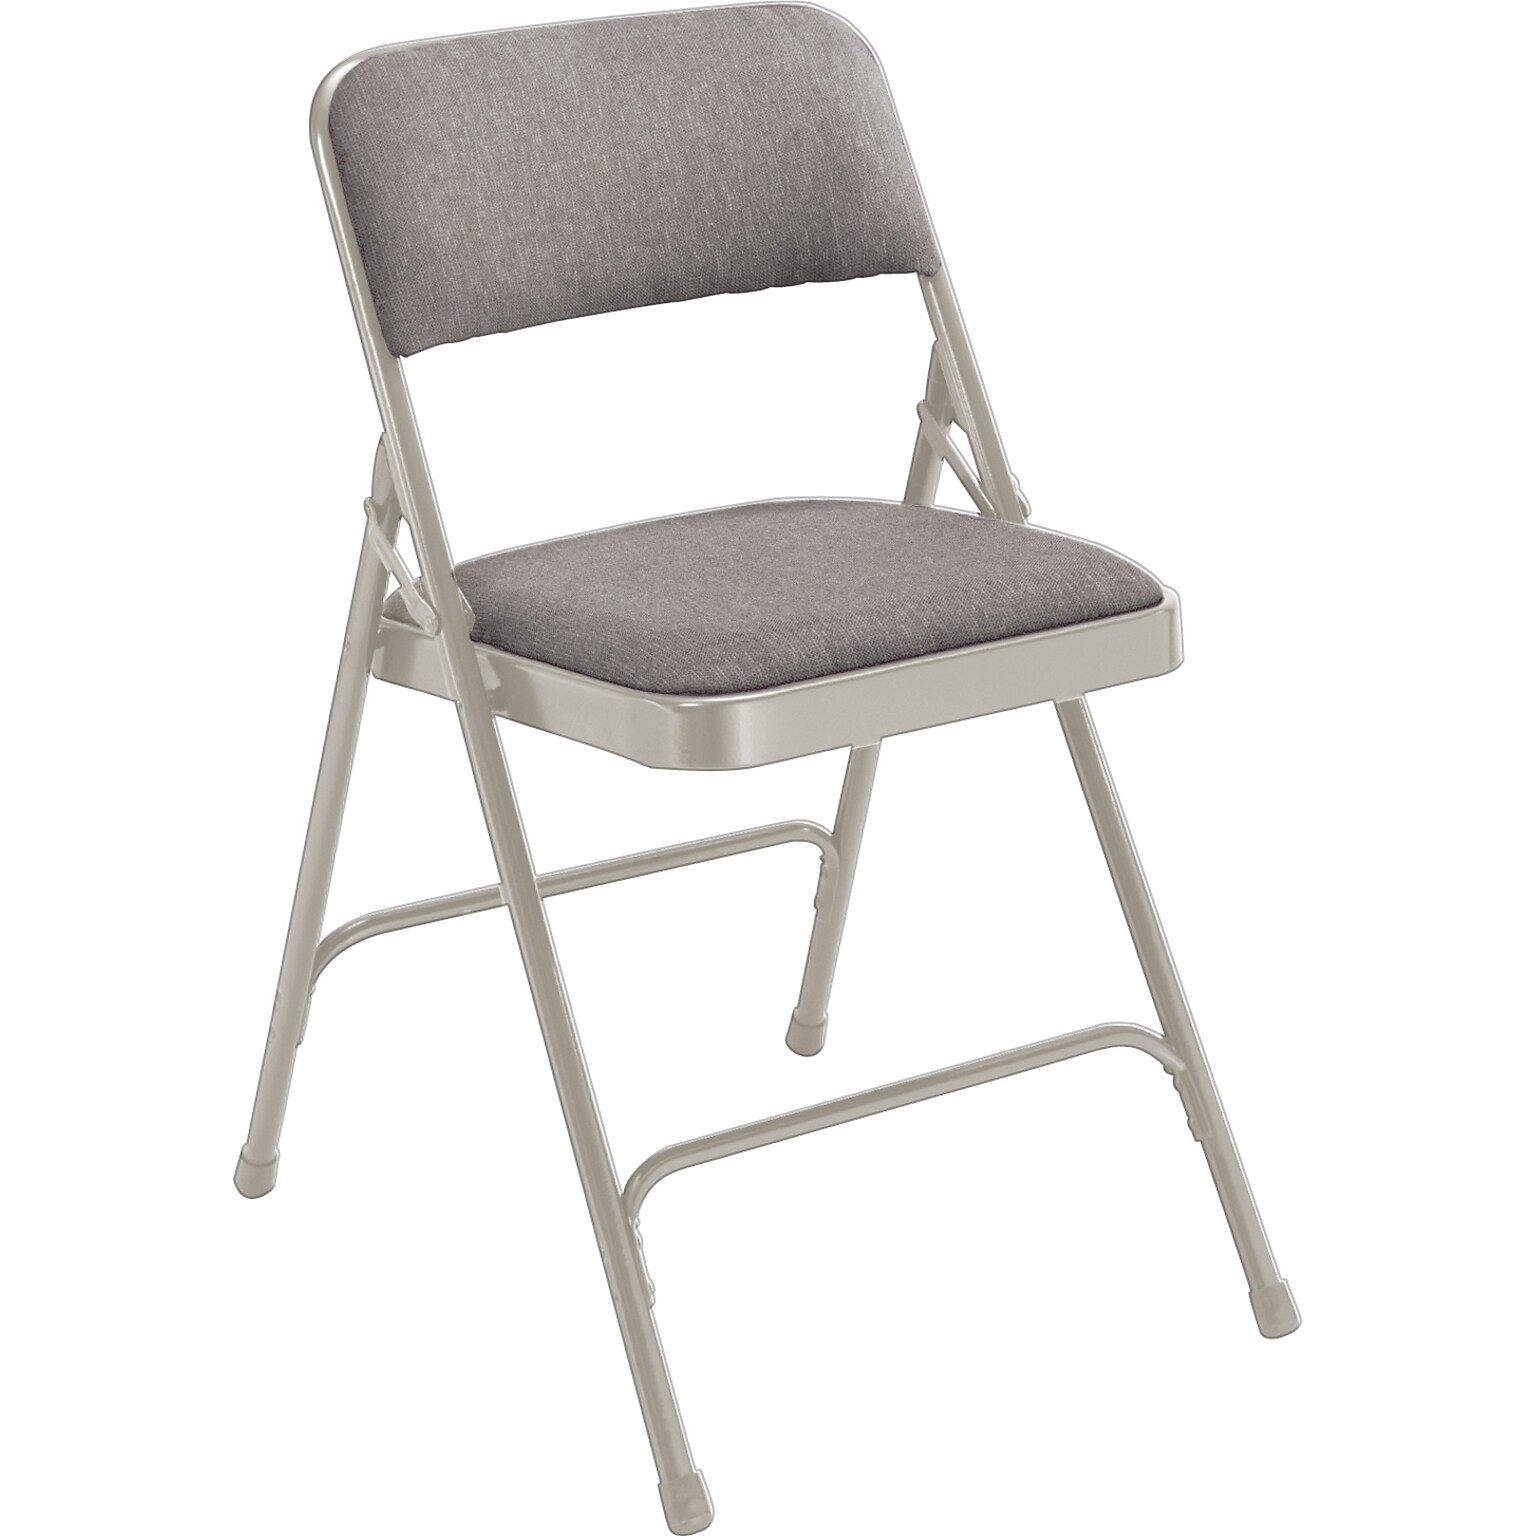 NPS 2200 Series Fabric Padded Premium Folding Chairs, Greystone/Grey, 4/Pack (2202/4)